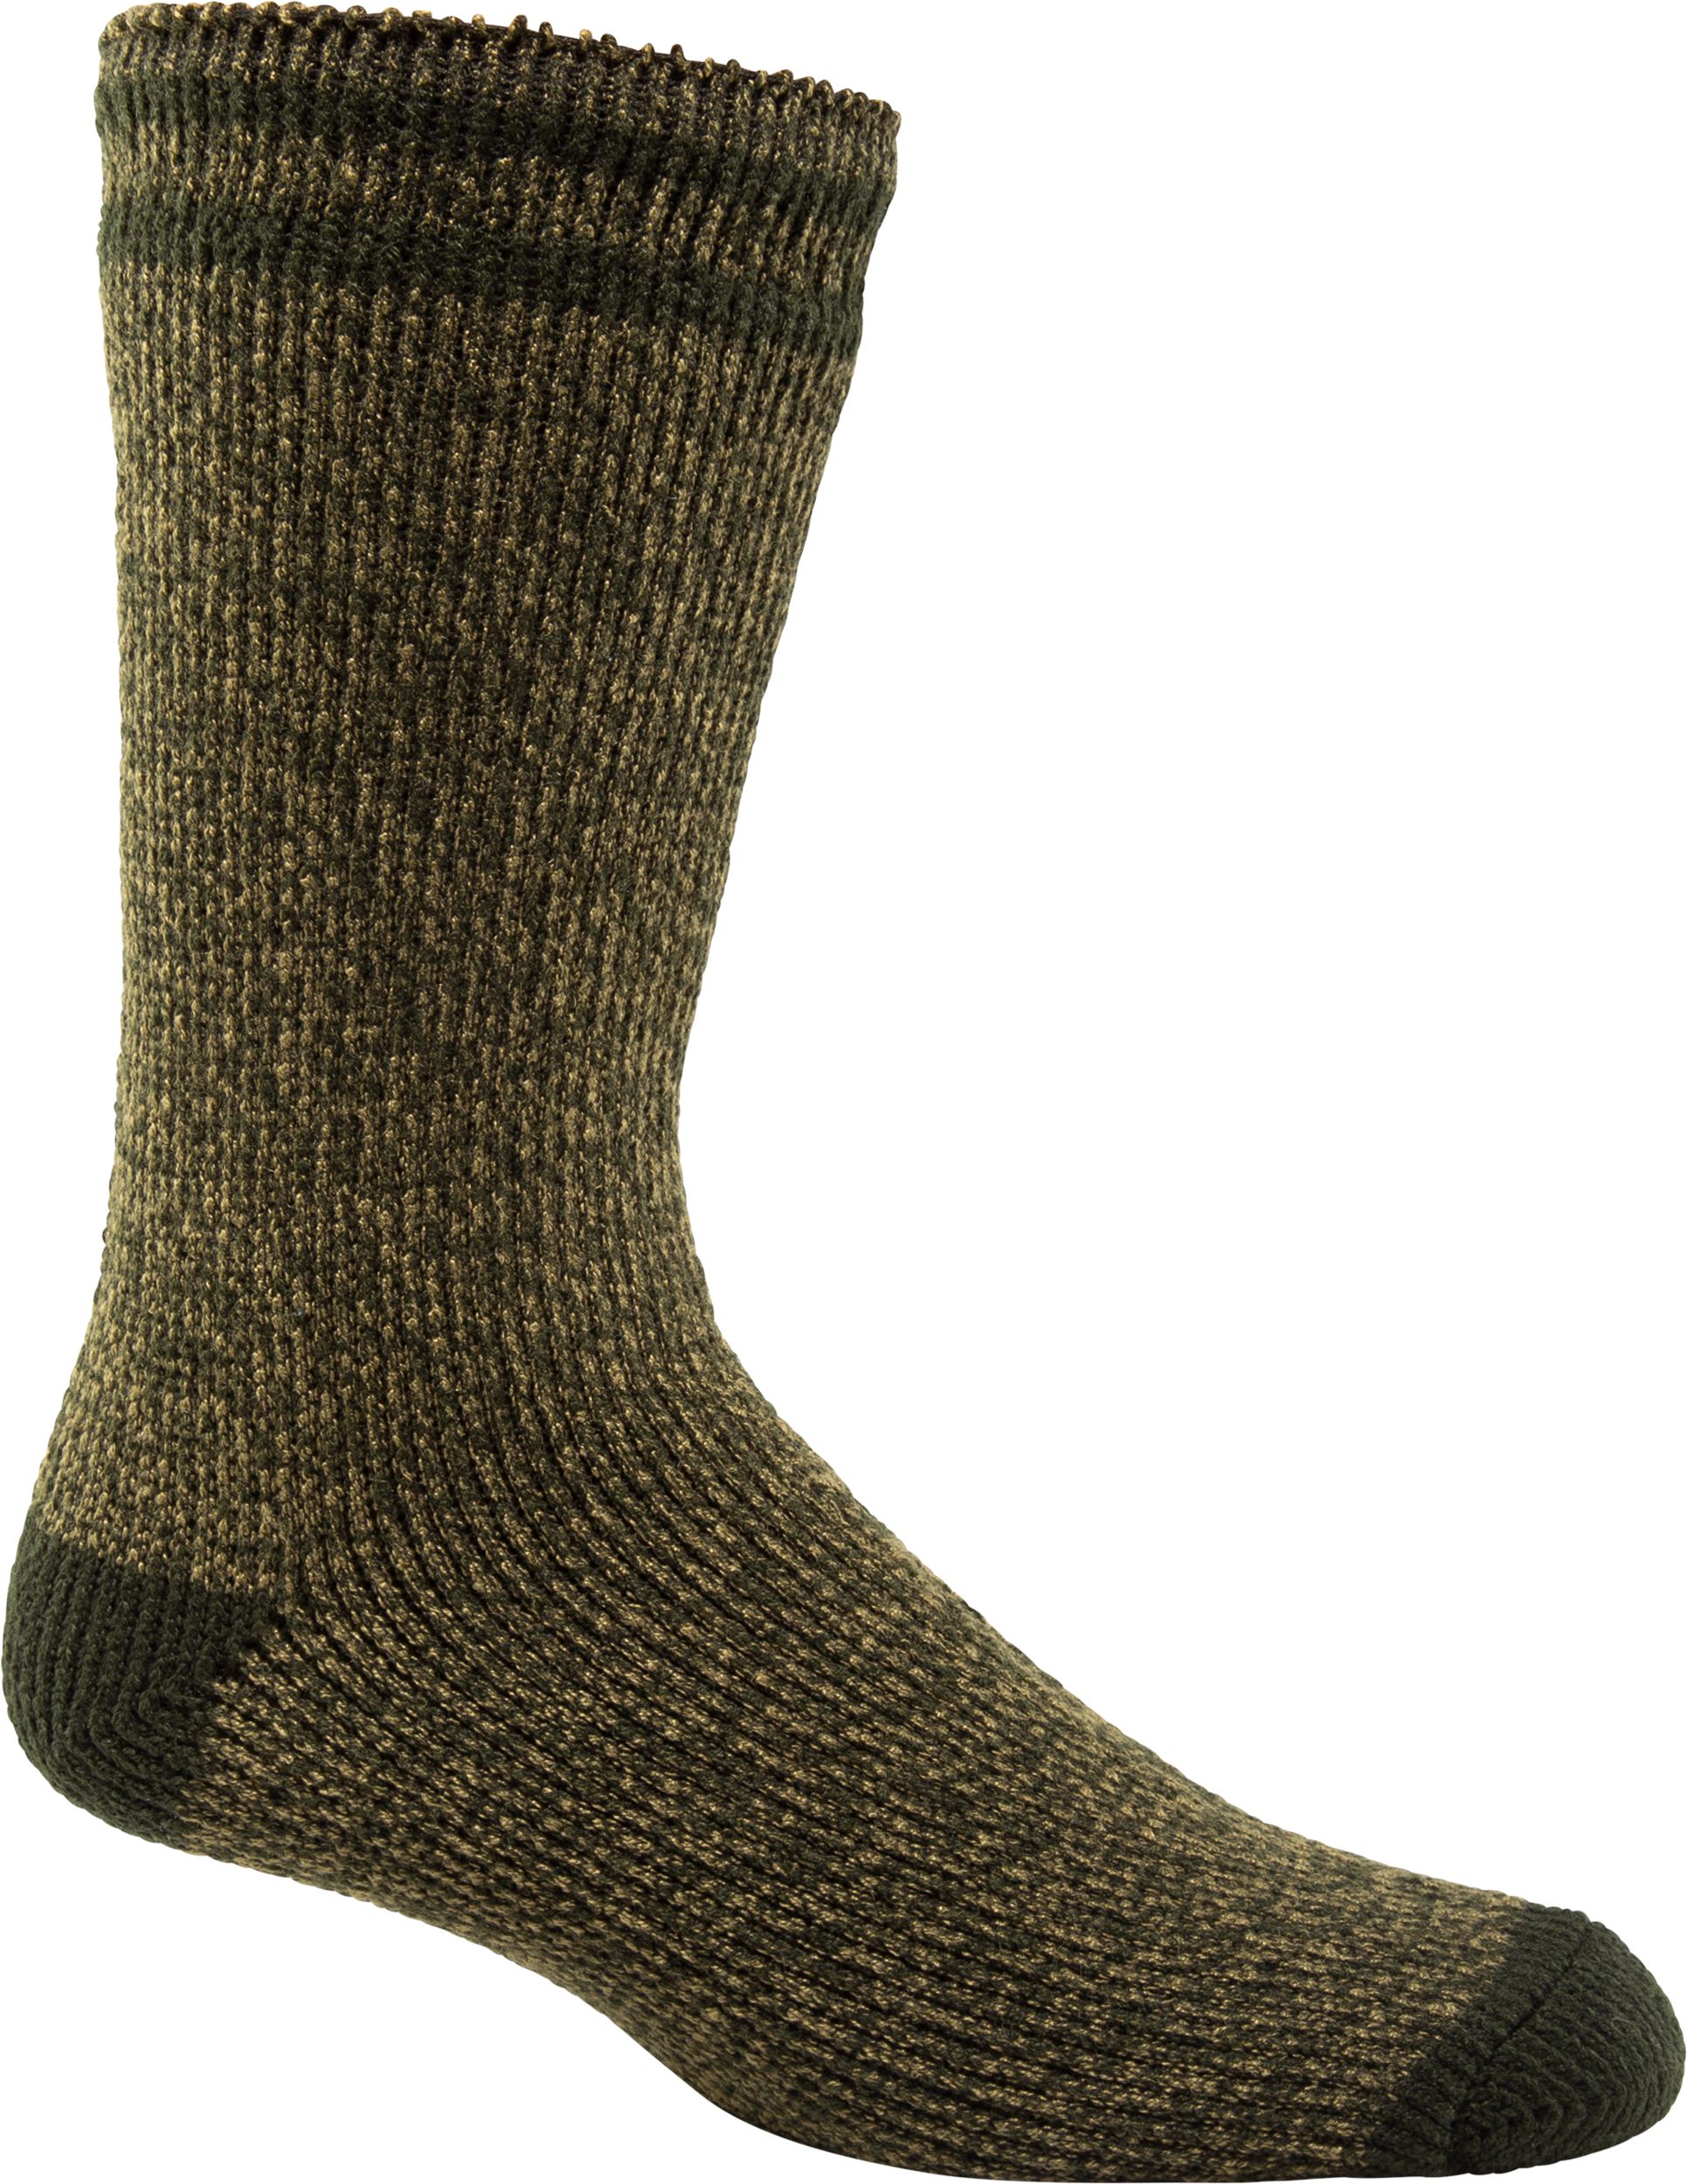 Ripzone Men's T-Max Winter Socks  Cushioned Thermal